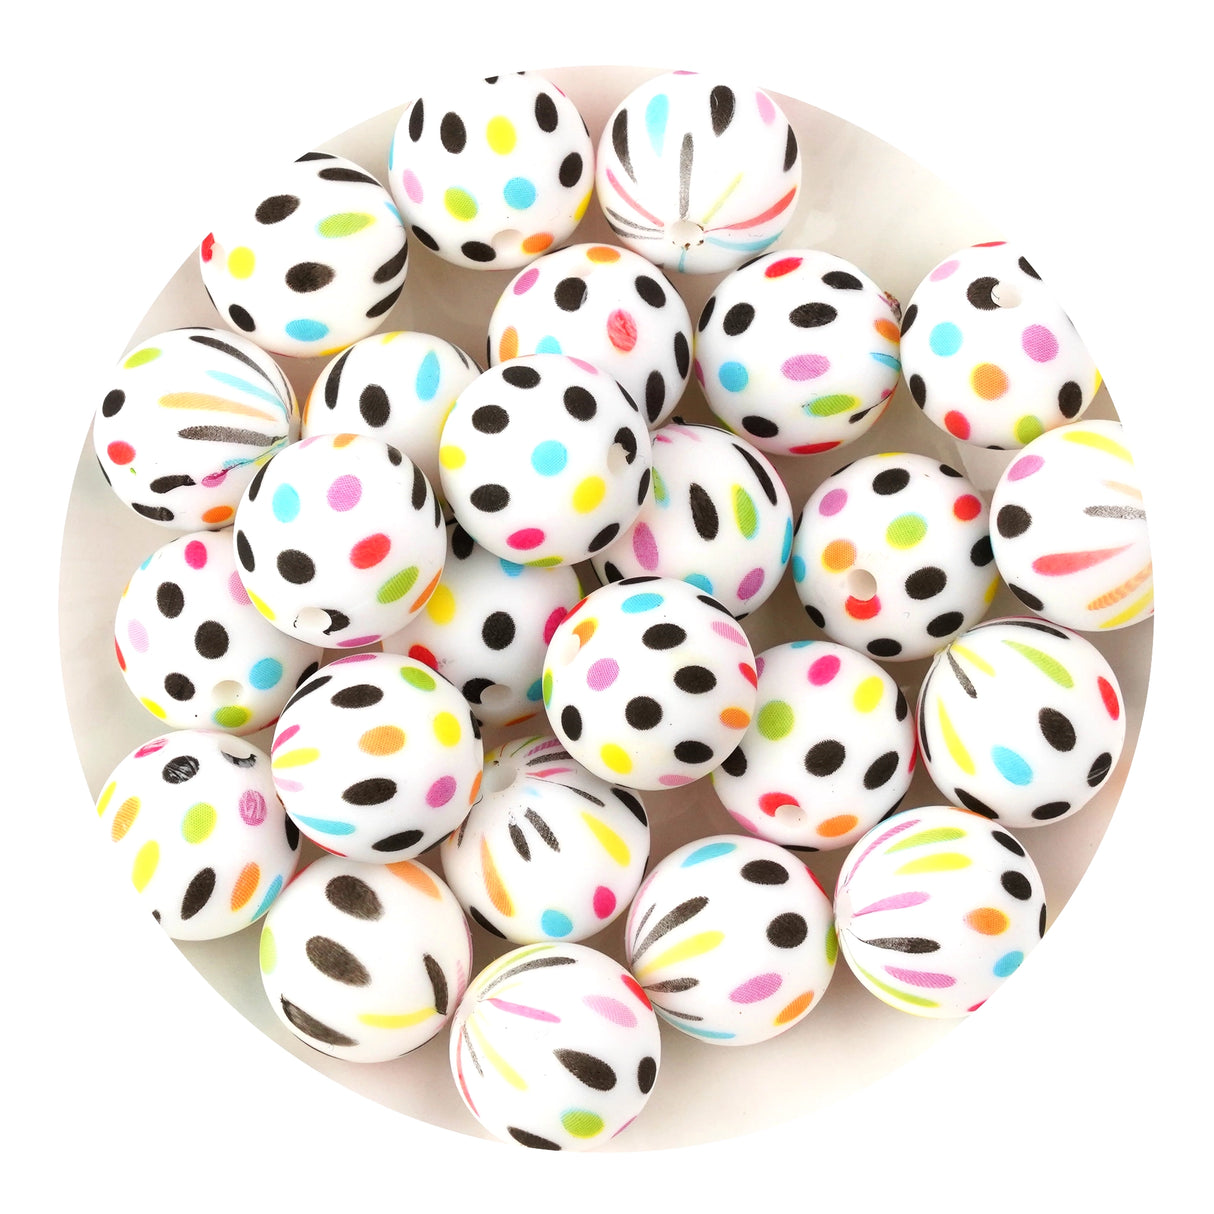 silicone bead round polka dots